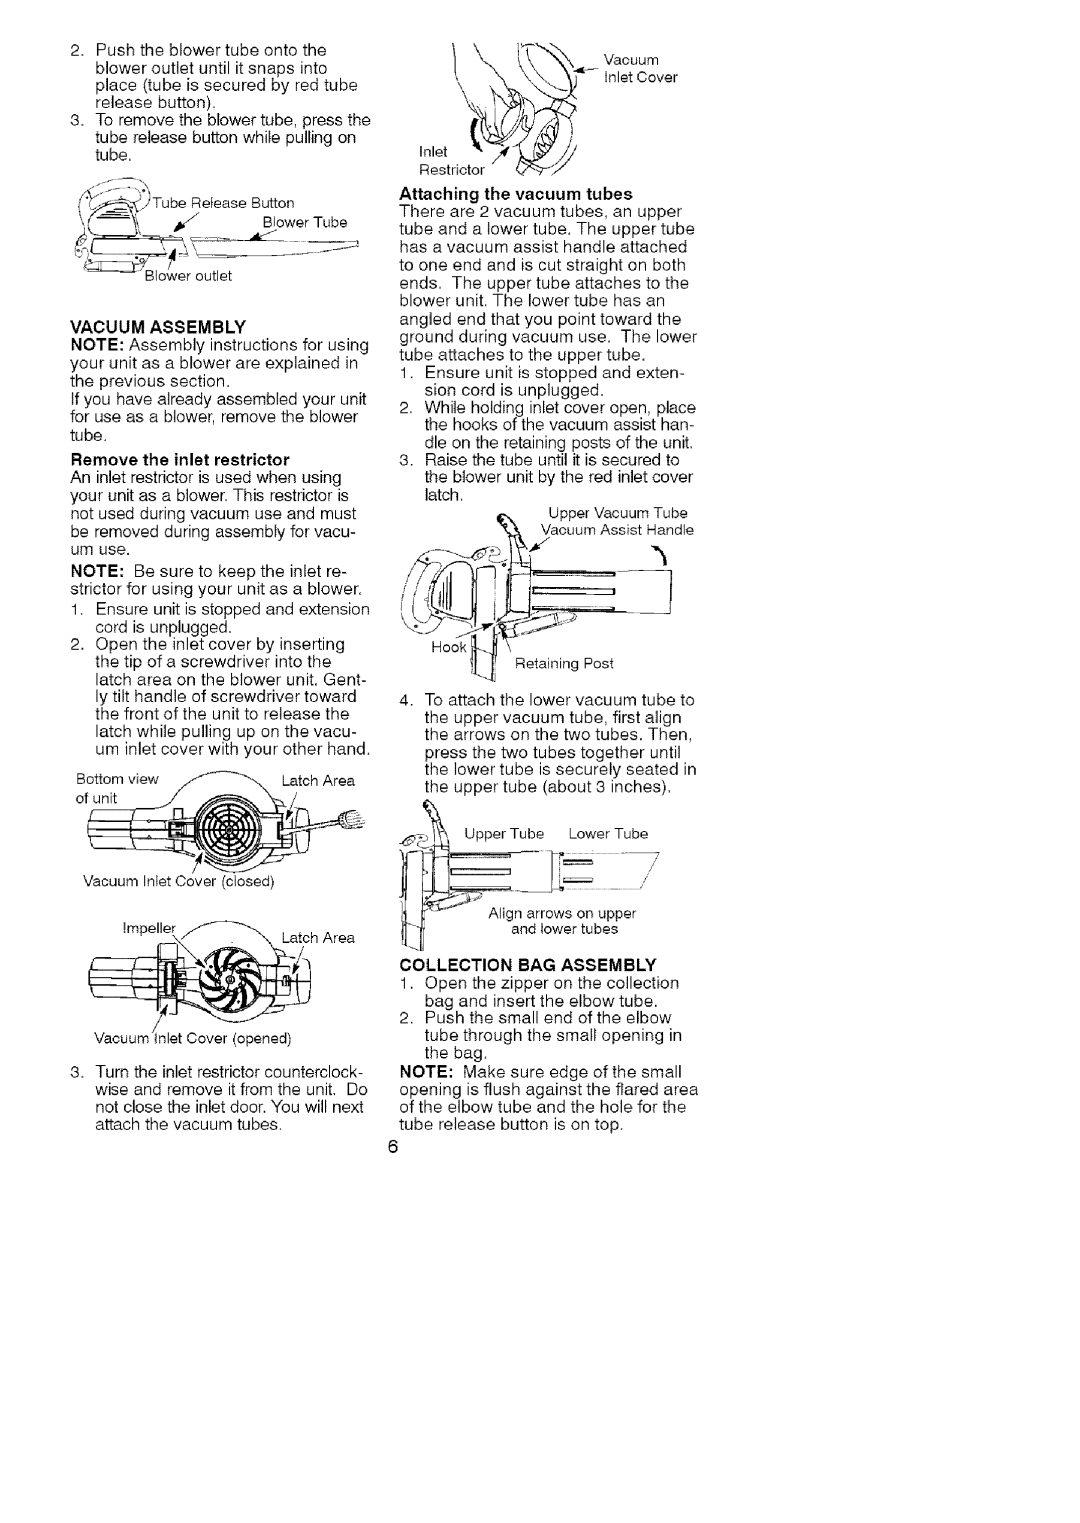 Craftsman 358.74824 instruction manual it arrowsoeuppe d,owertubes 